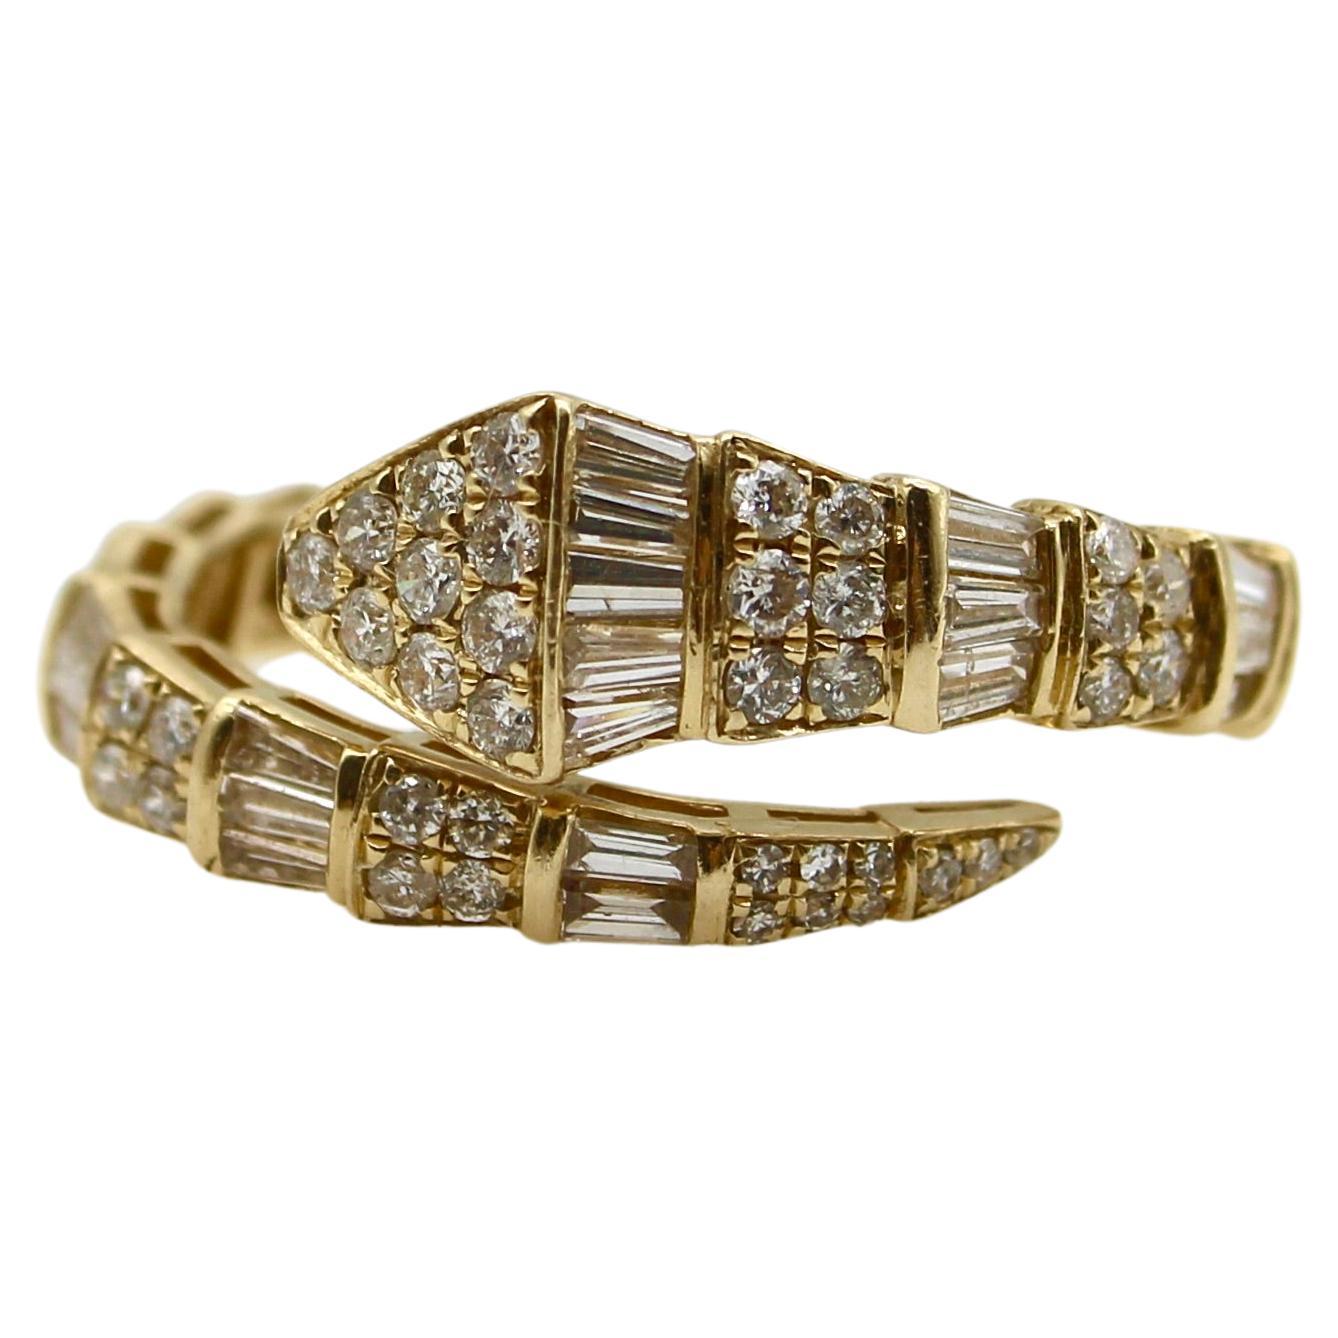  Vintage 14K Gold Diamond Snake Bypass Ring 